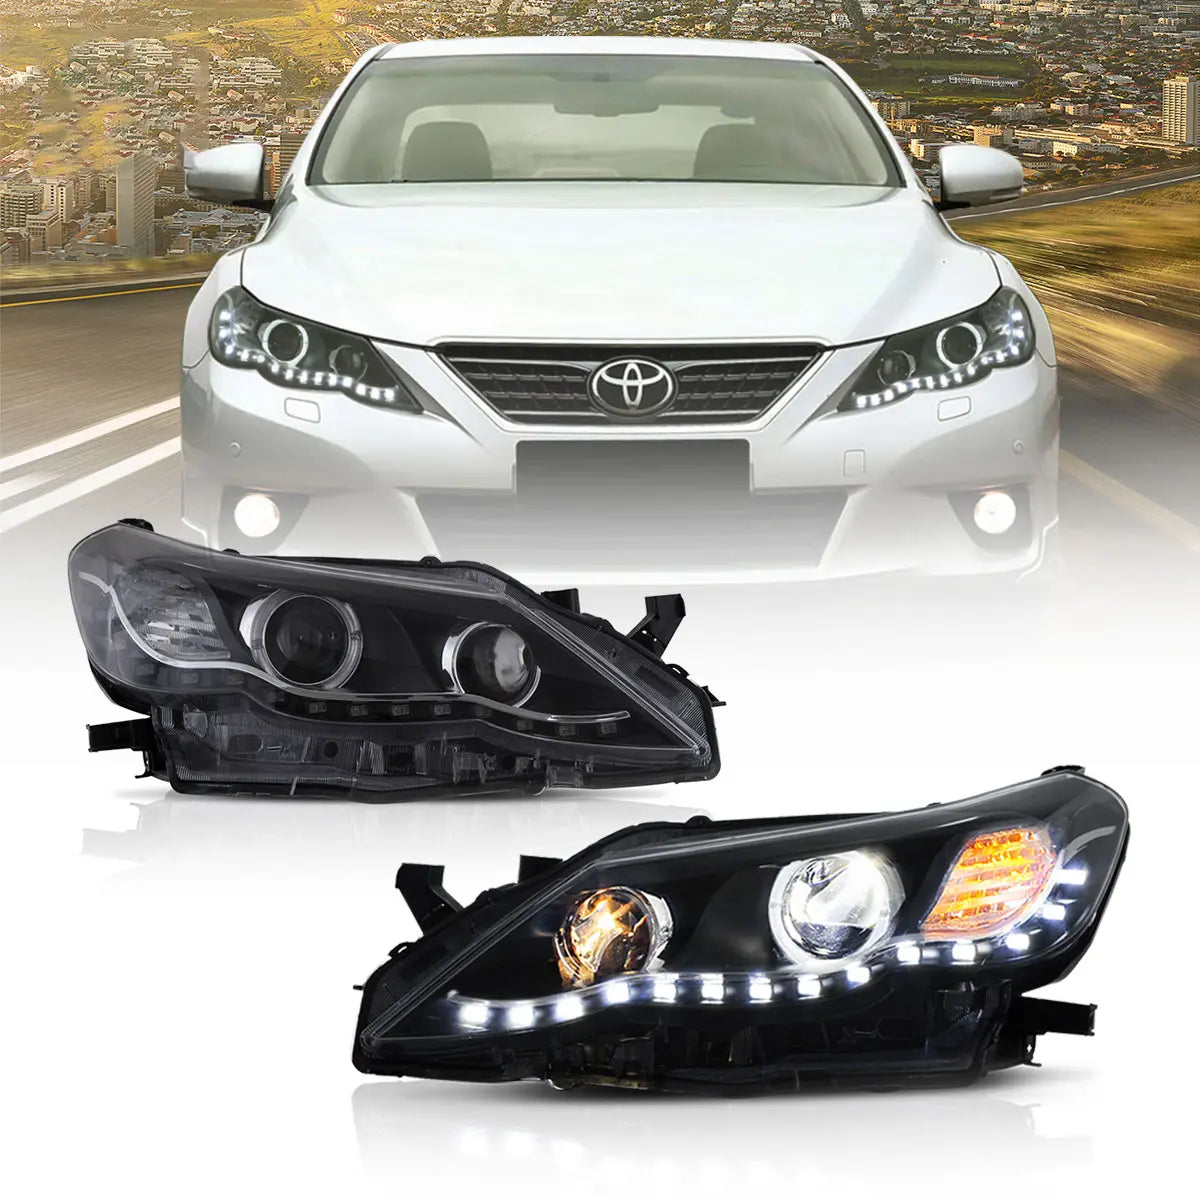 2x Nebelscheinwerfer + LED-Tagfahrlicht für Toyota Solara, Tacoma, Tundra,  Sequoia – Chromversion – CANBUS - France-Xenon